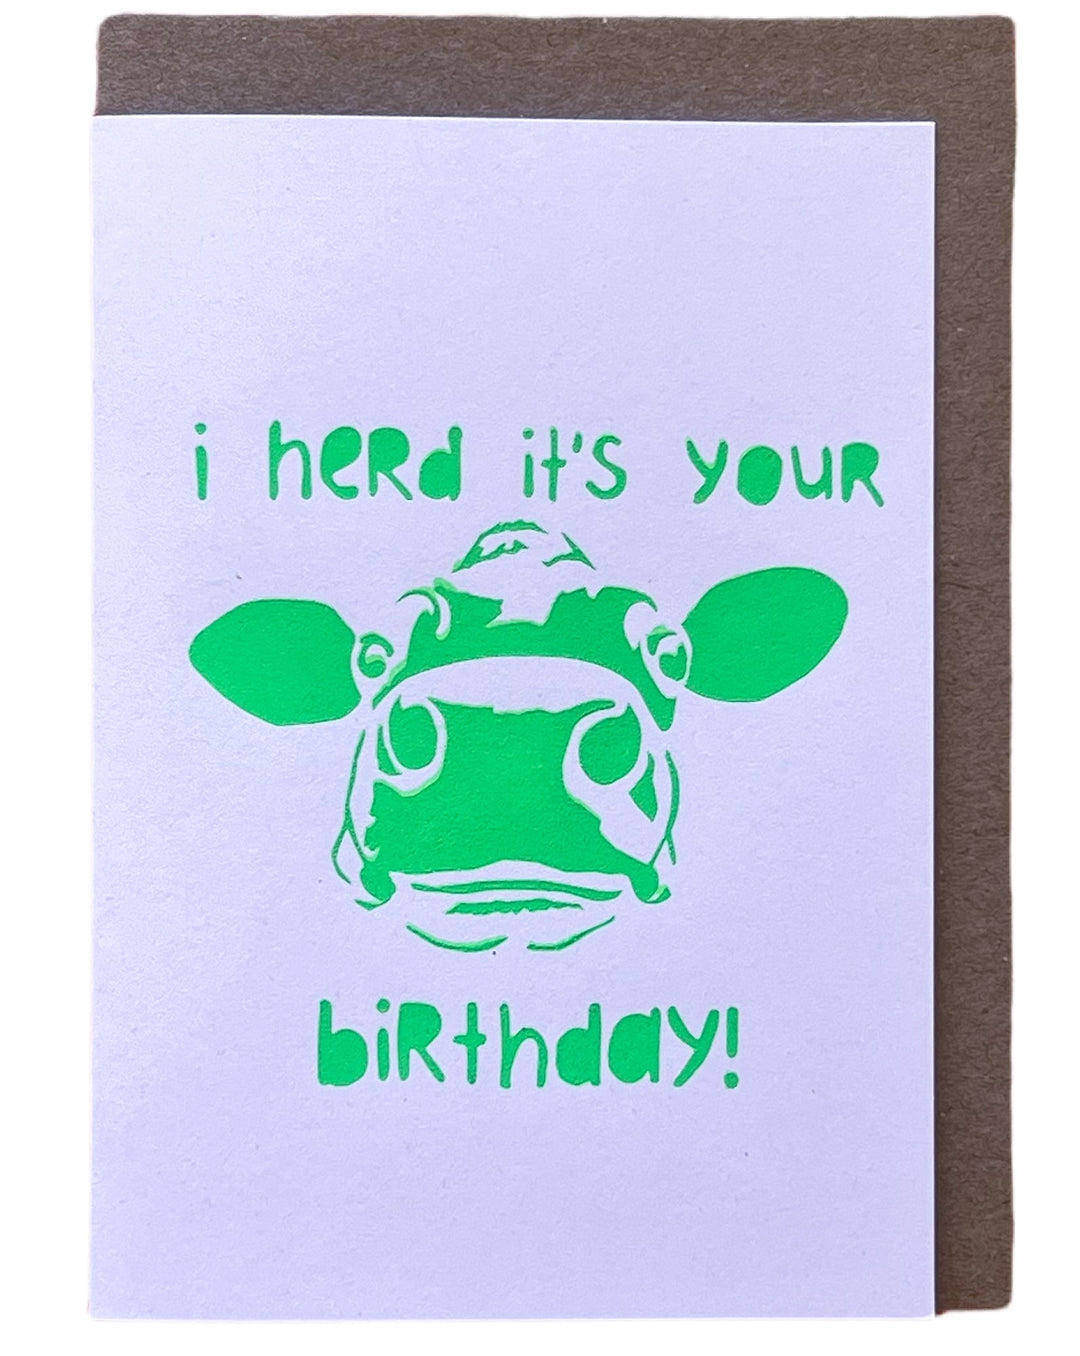 I heard it’s your birthday Card